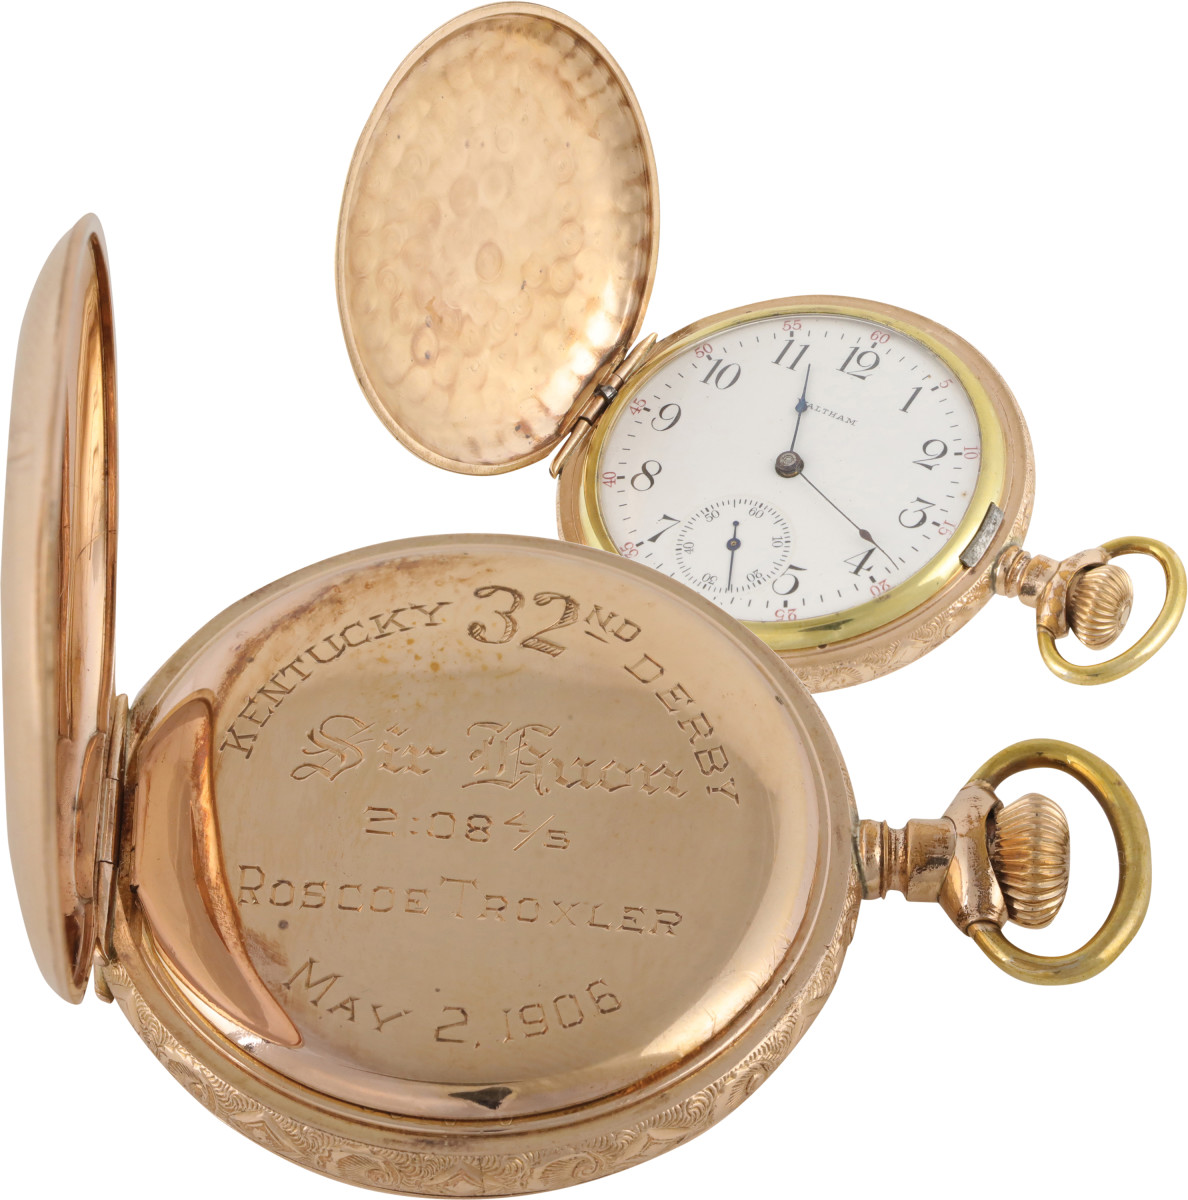 The 1906 Sir Huon Kentucky Derby gold watch awarded to the winning jockey.